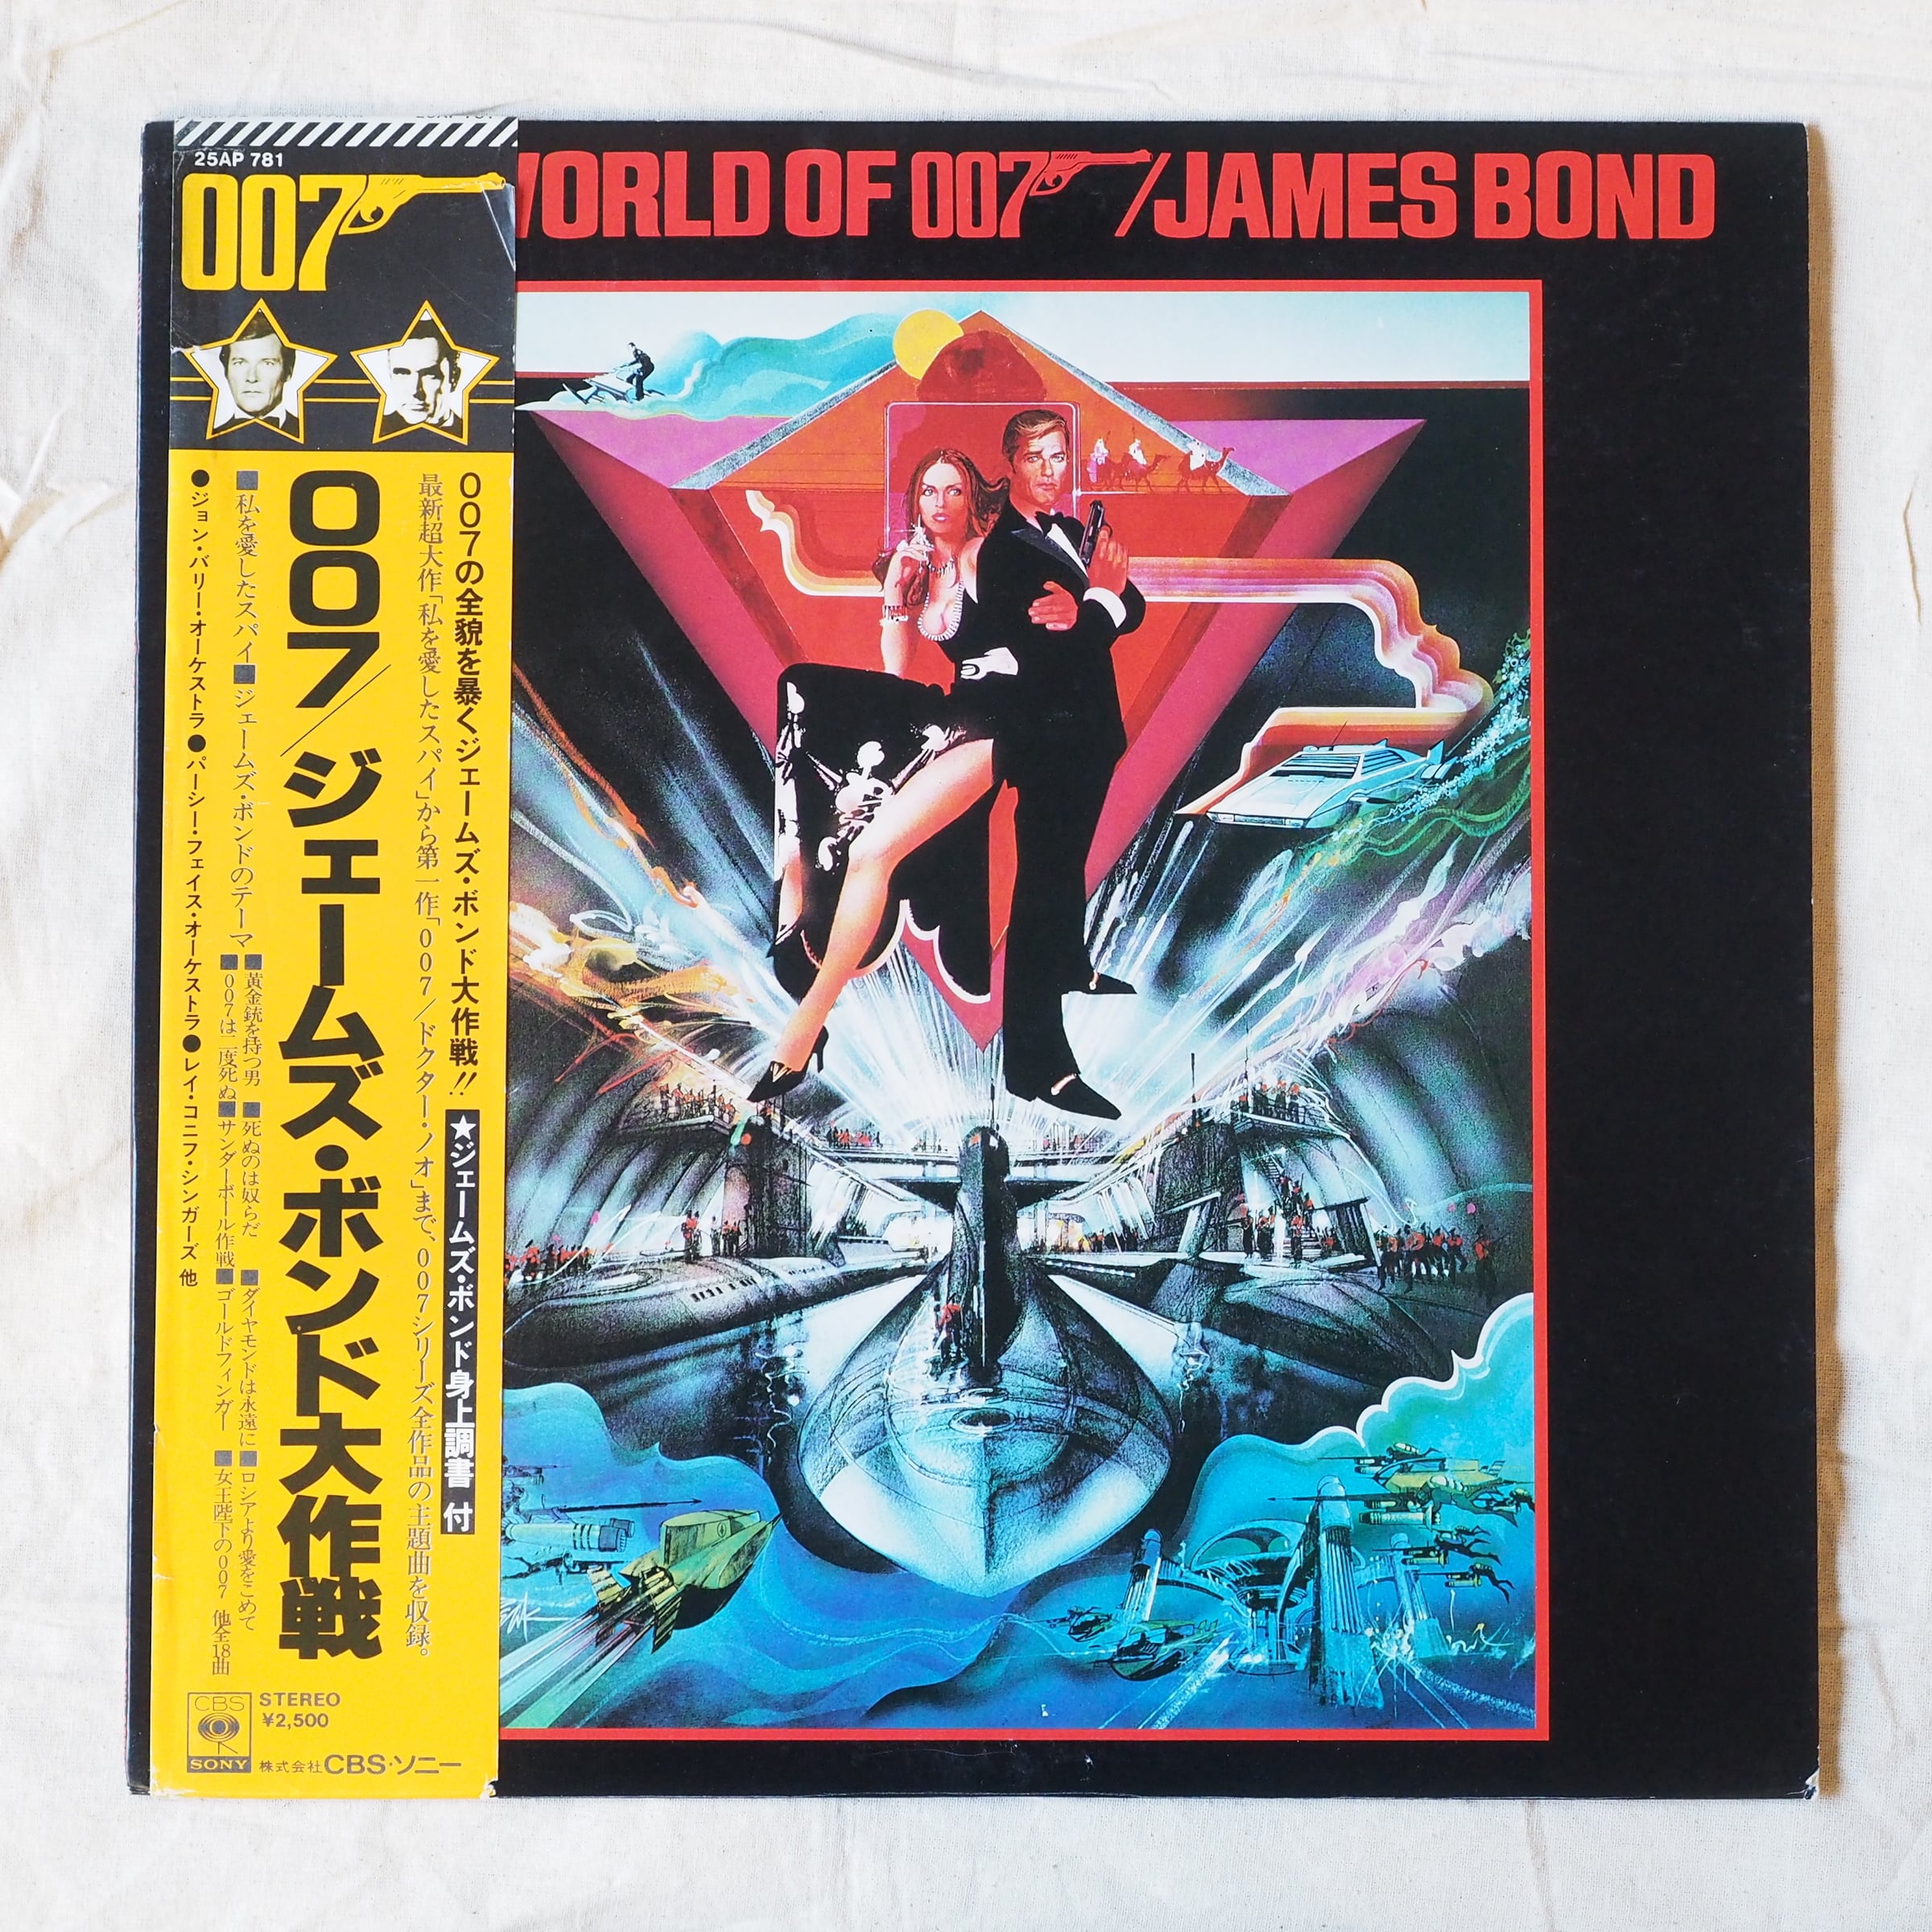 [USED LP] The World of 007 James Bond / 007 ジェームズ・ボンド大作戦